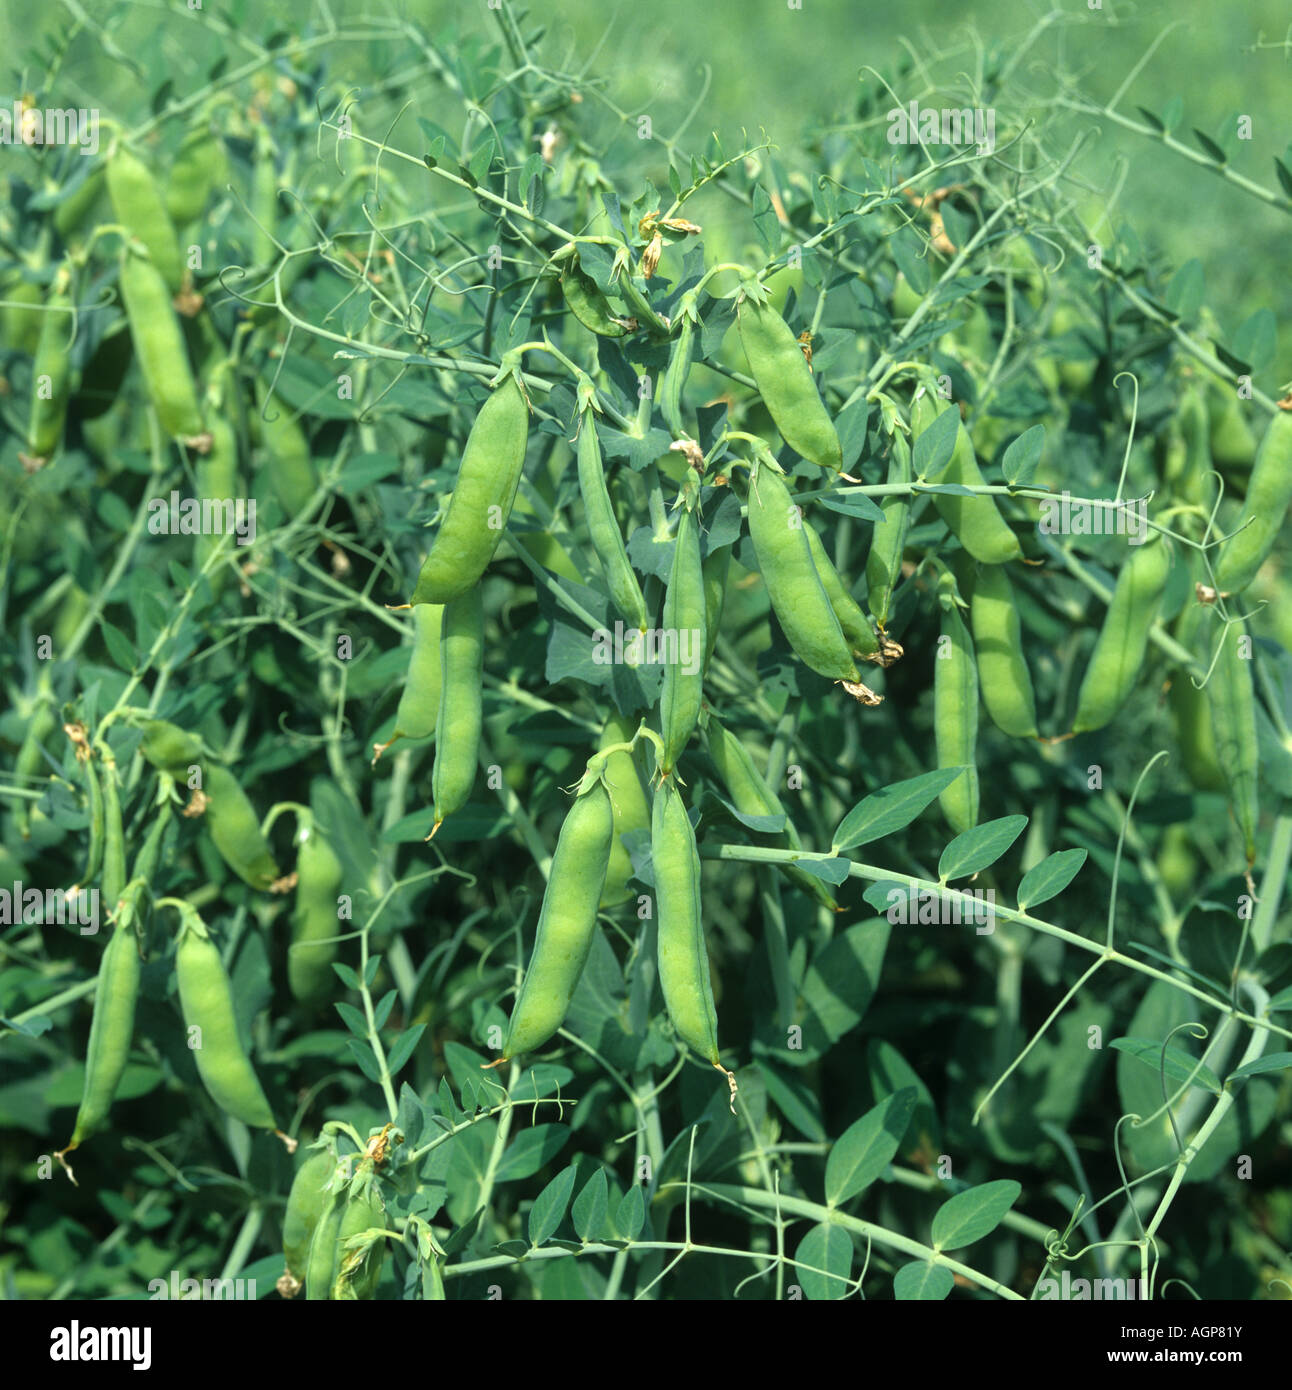 Mature pods of marrowfat peas variety Progreta on crop plants Stock Photo